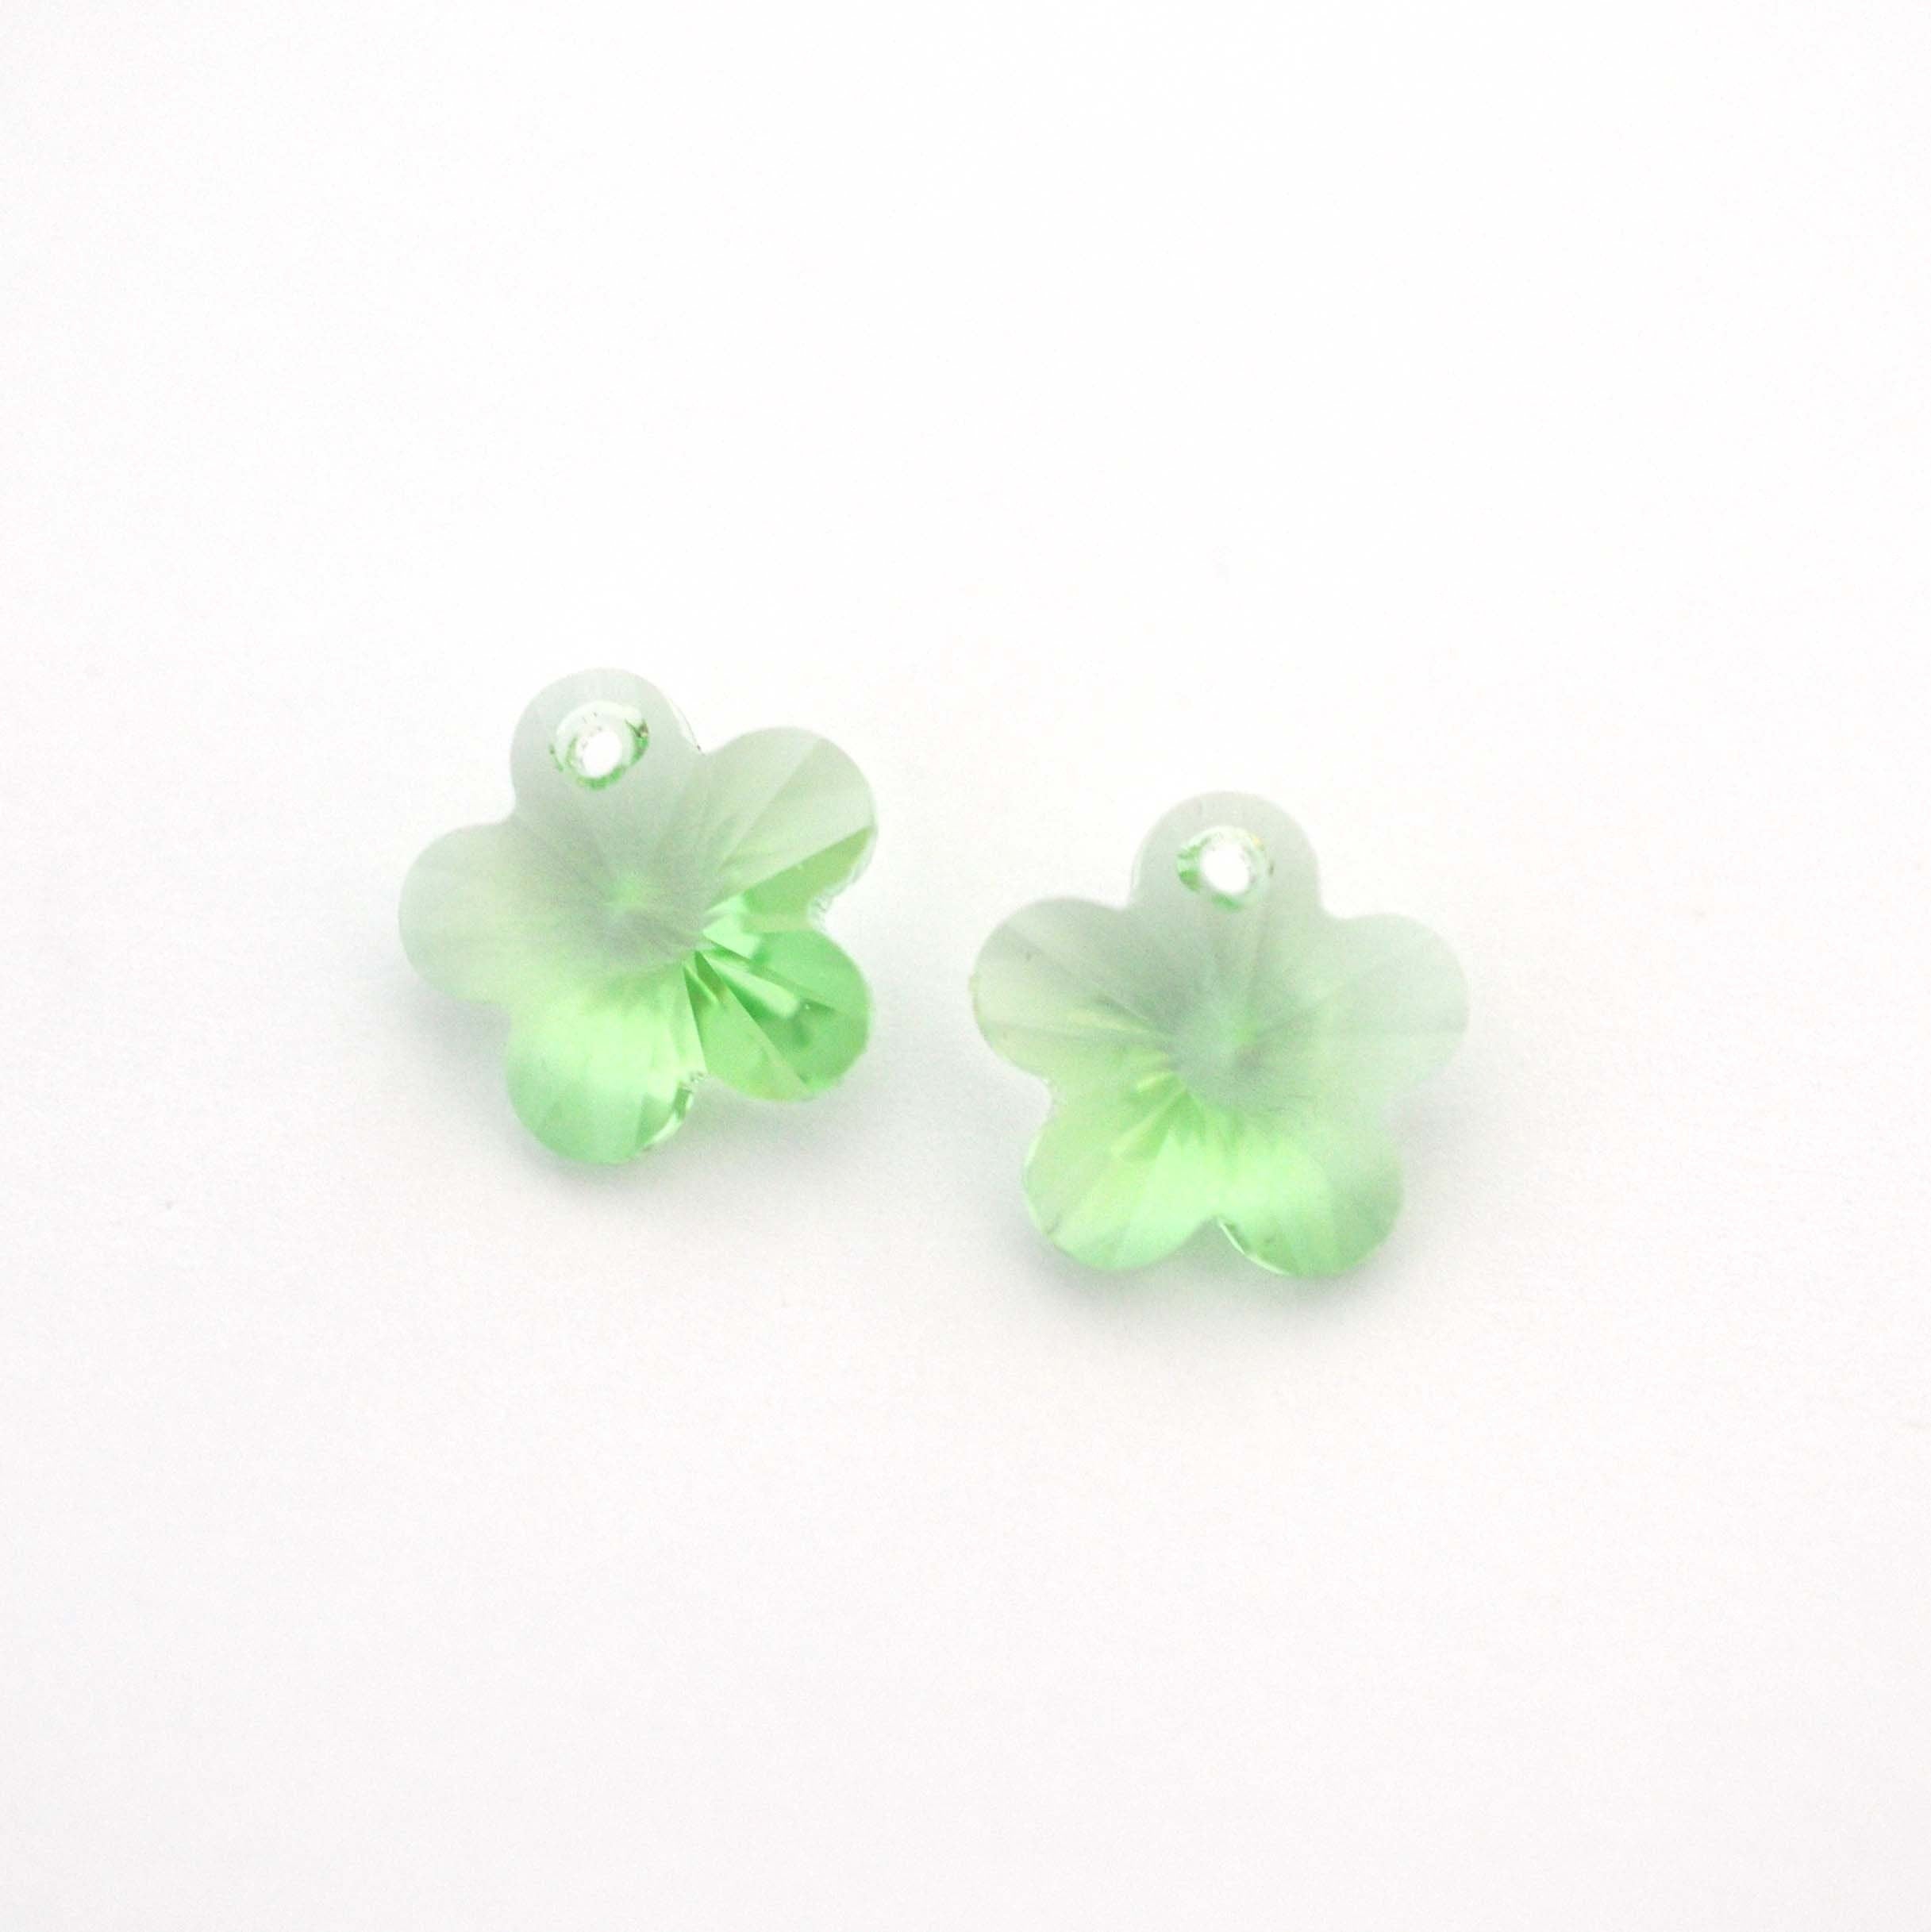 Peridot Green Flower Pendant 6744 Barton Crystal 14mm - 1 Pair (2 Pieces)